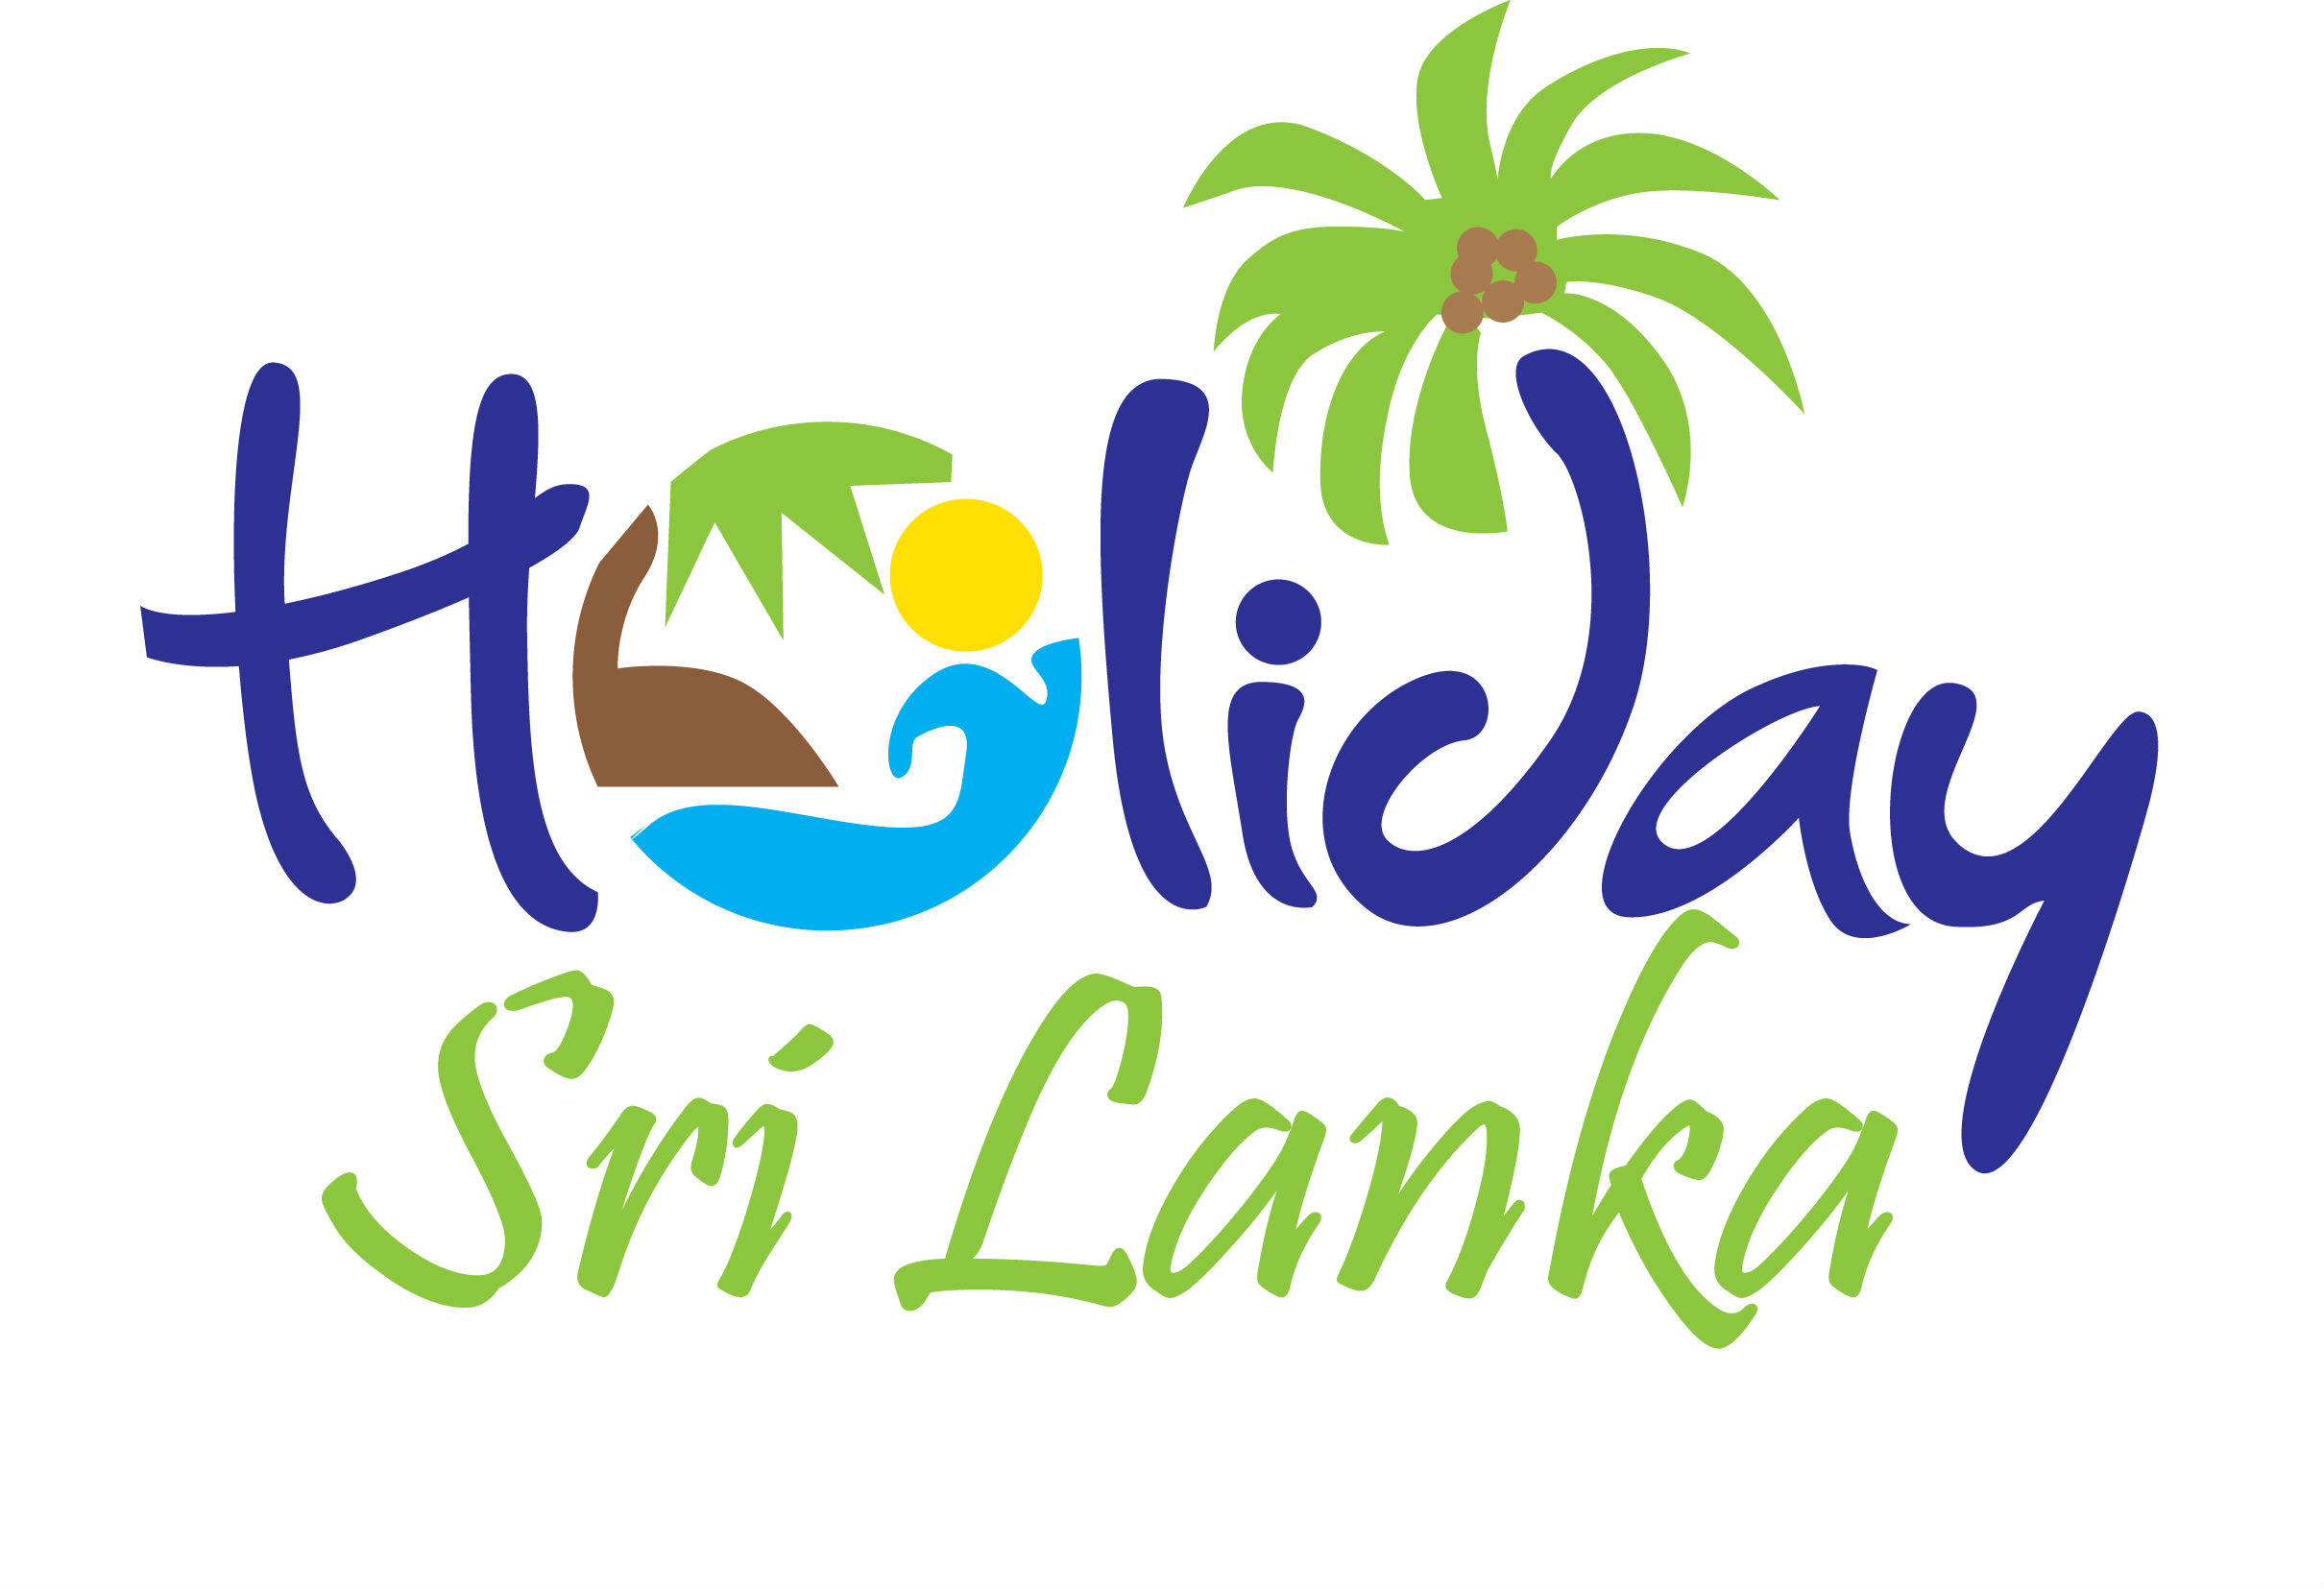 Holiday Sri Lanka Tours